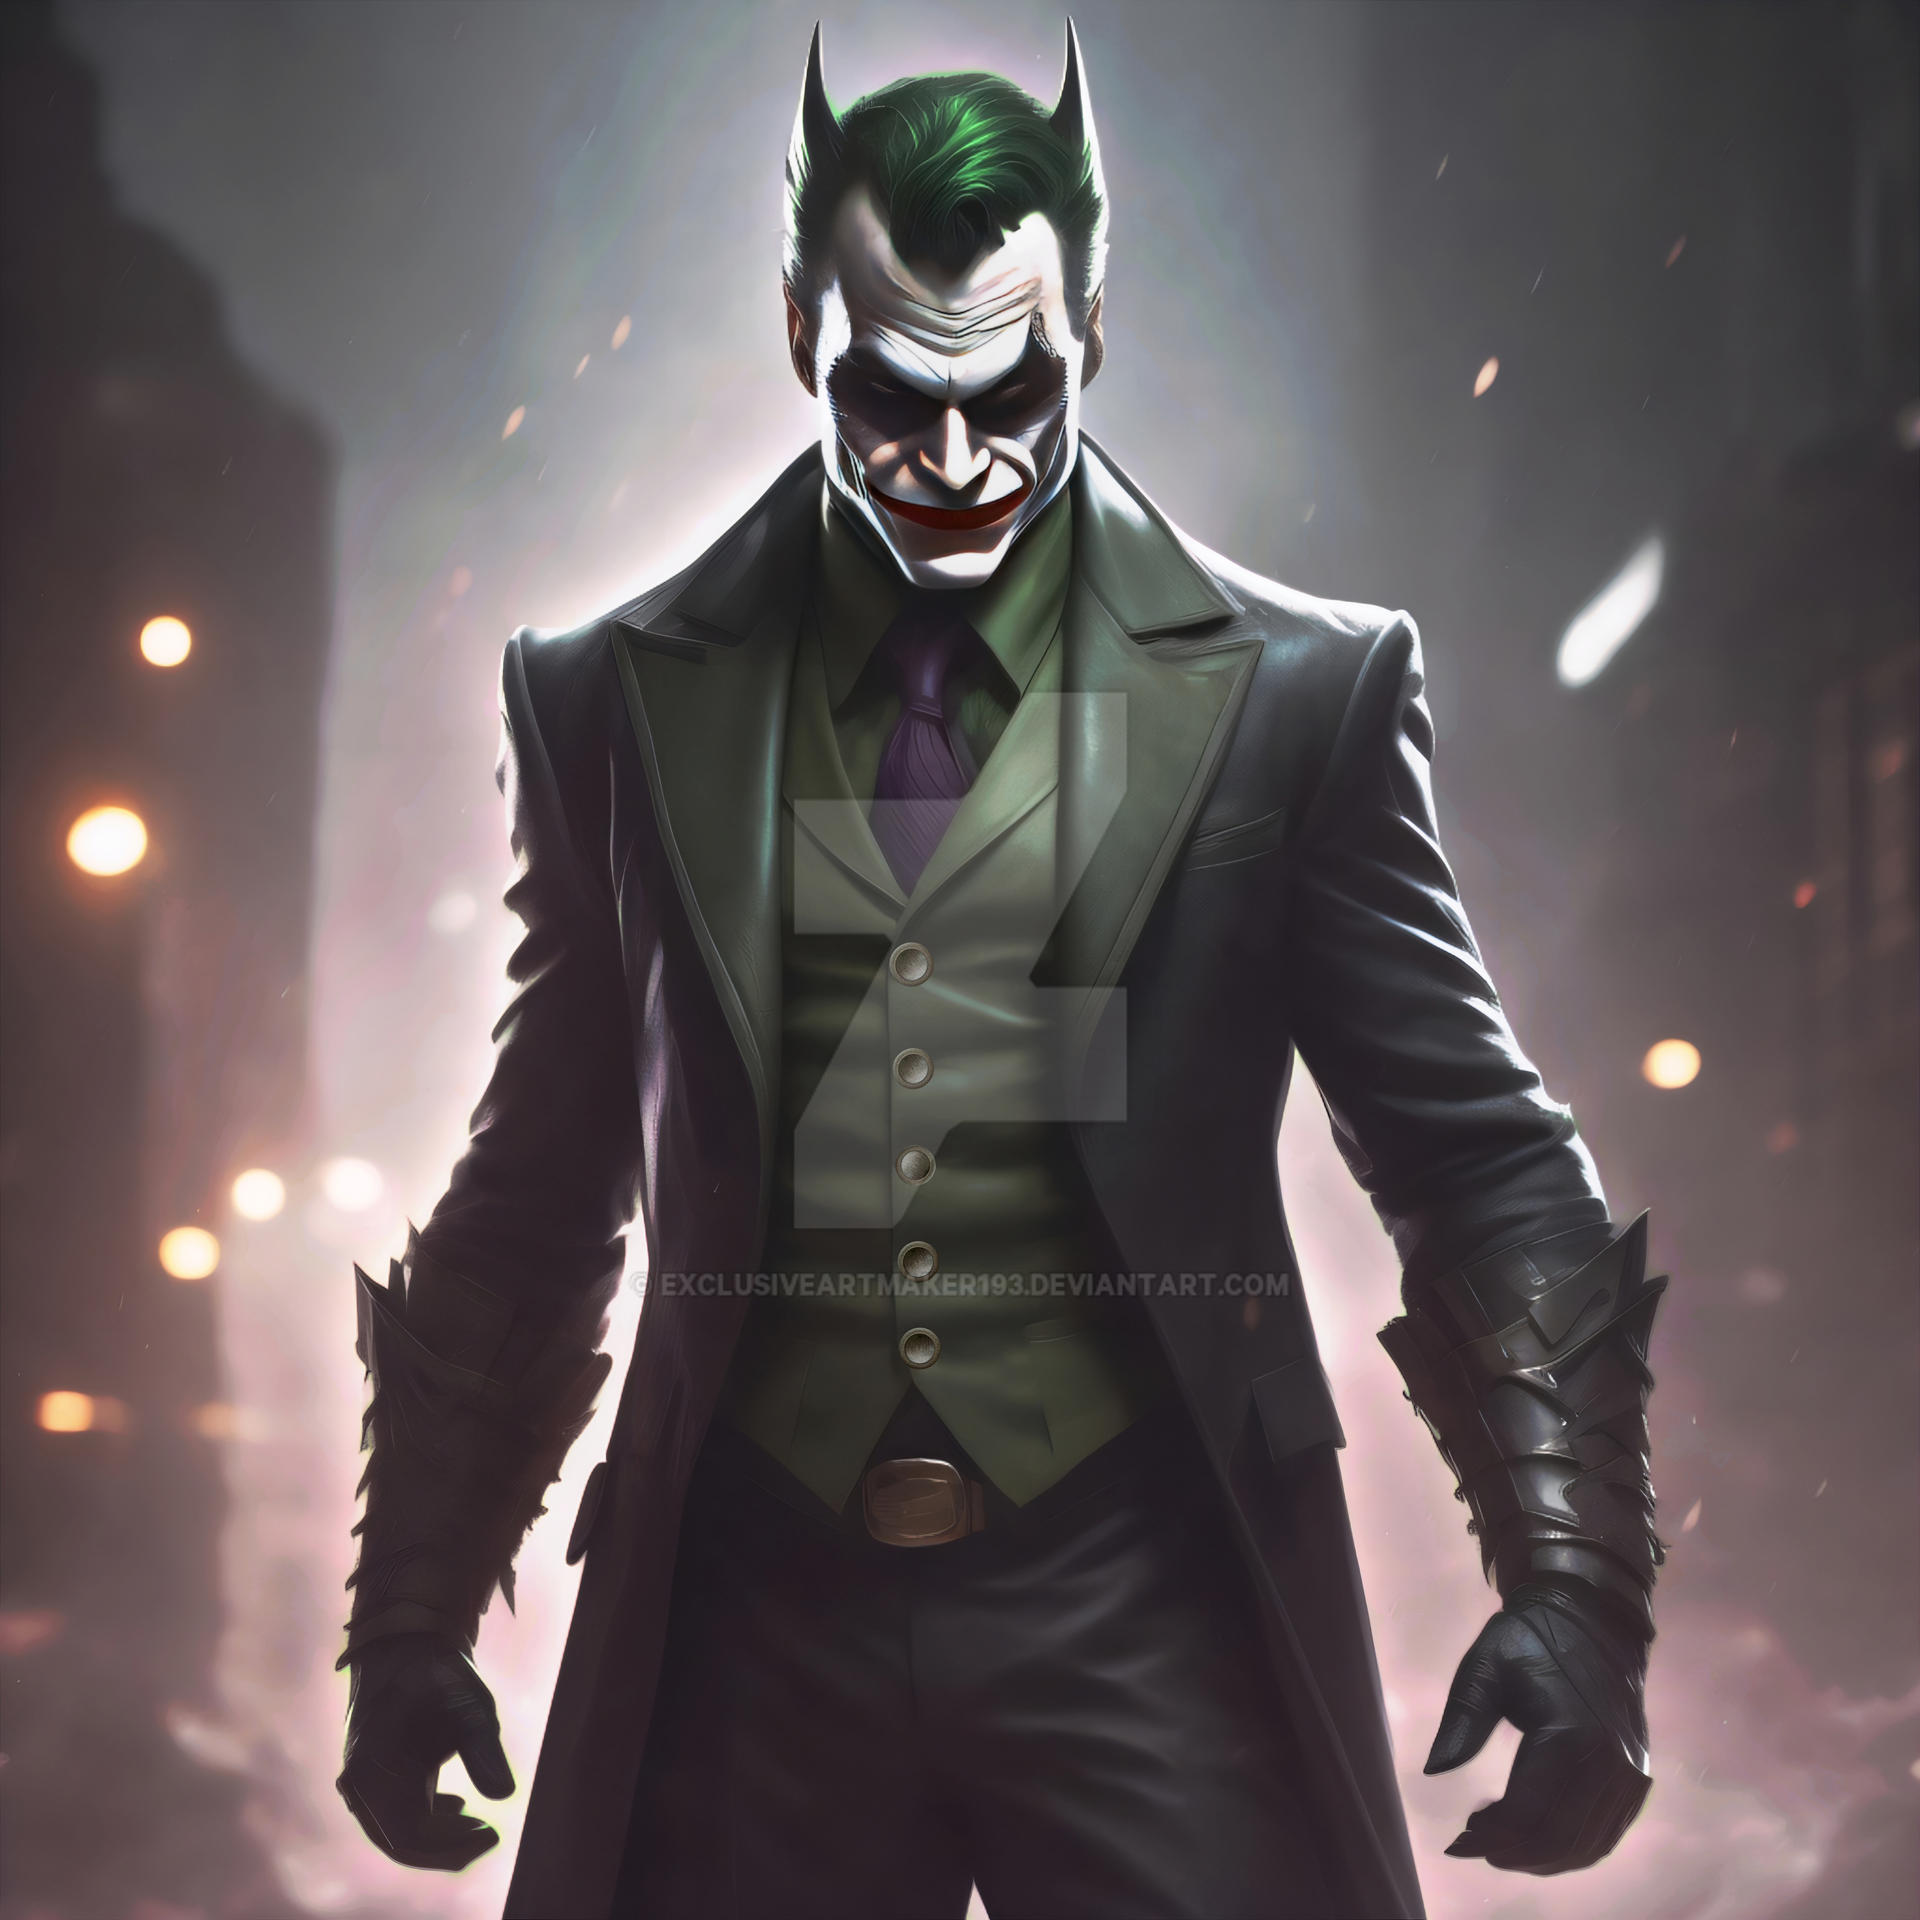 Batman The Joker. Concept Art by exclusiveartmaker193 on DeviantArt